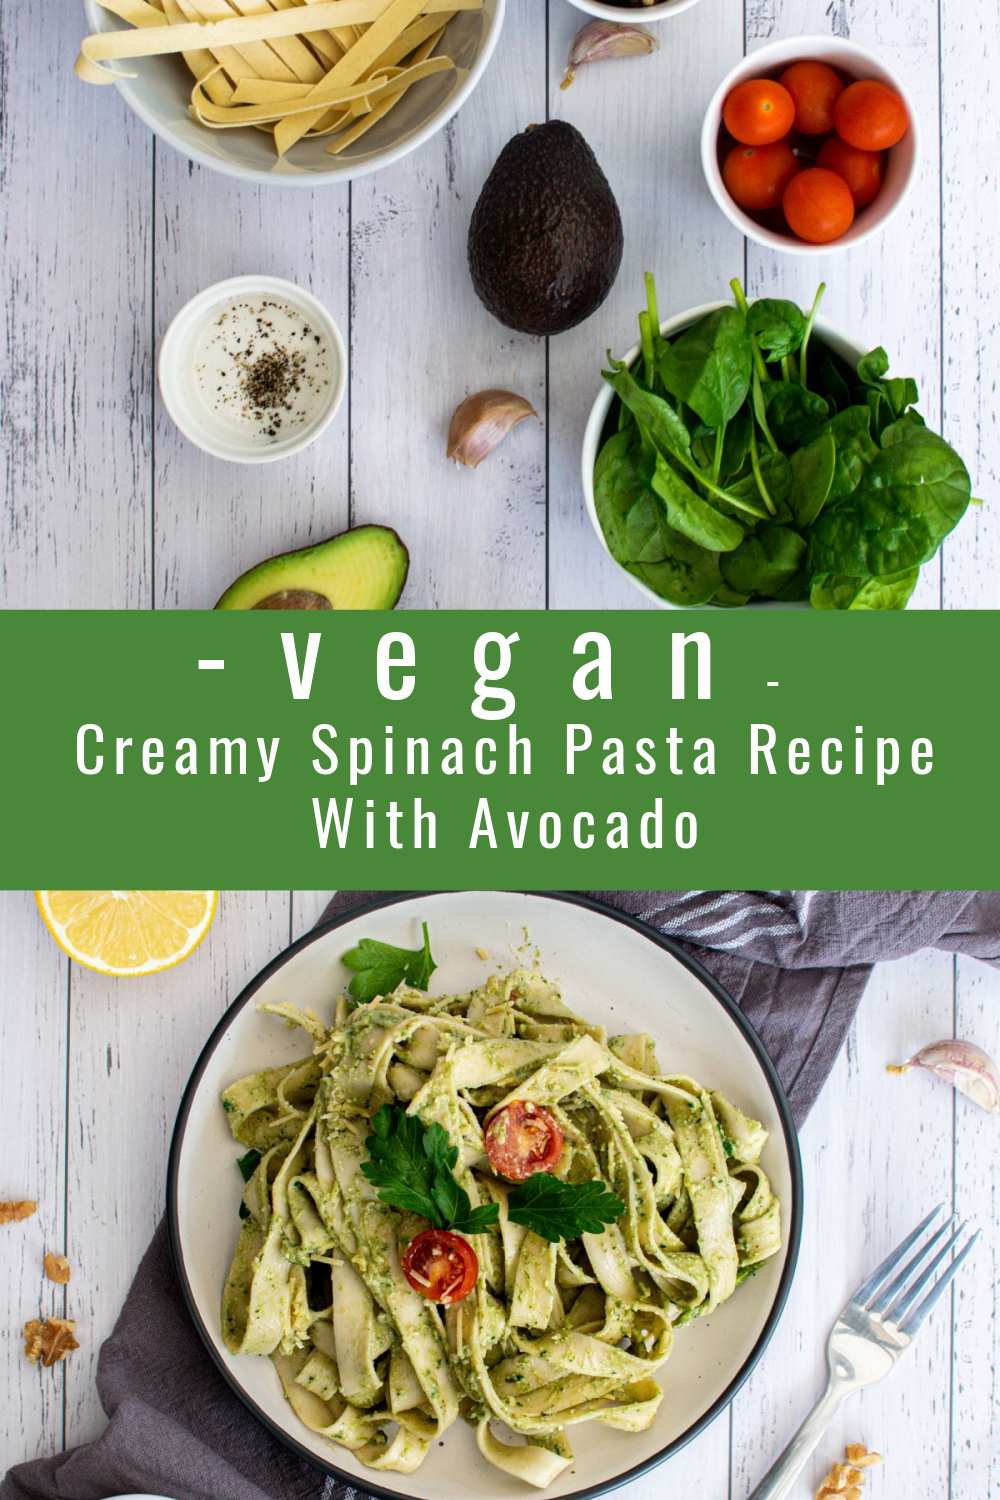 Vegan pasta recipe with spinach and avocado